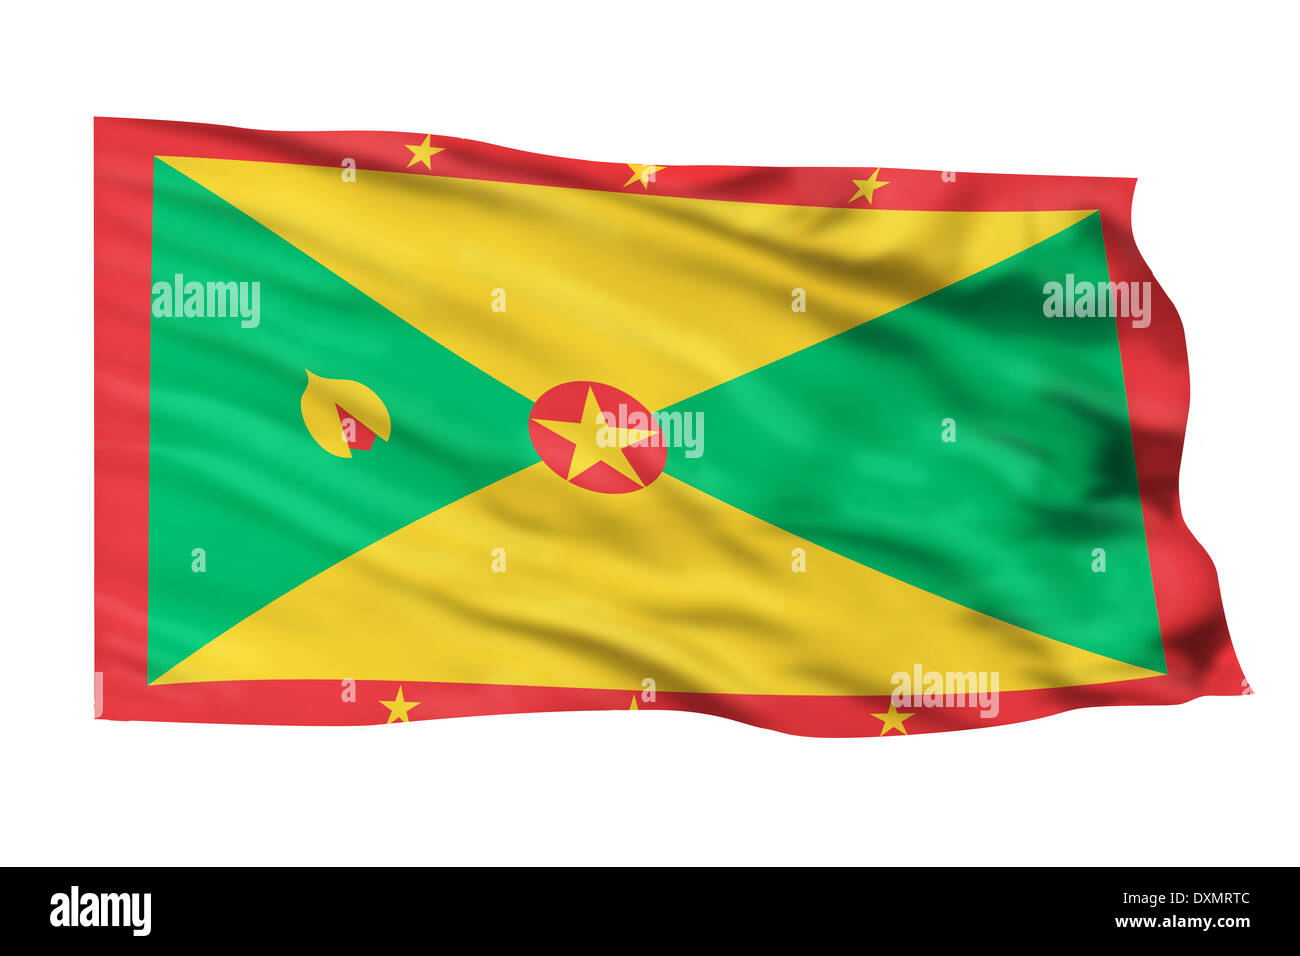 Grenada flag flying high in the sky. Stock Photo